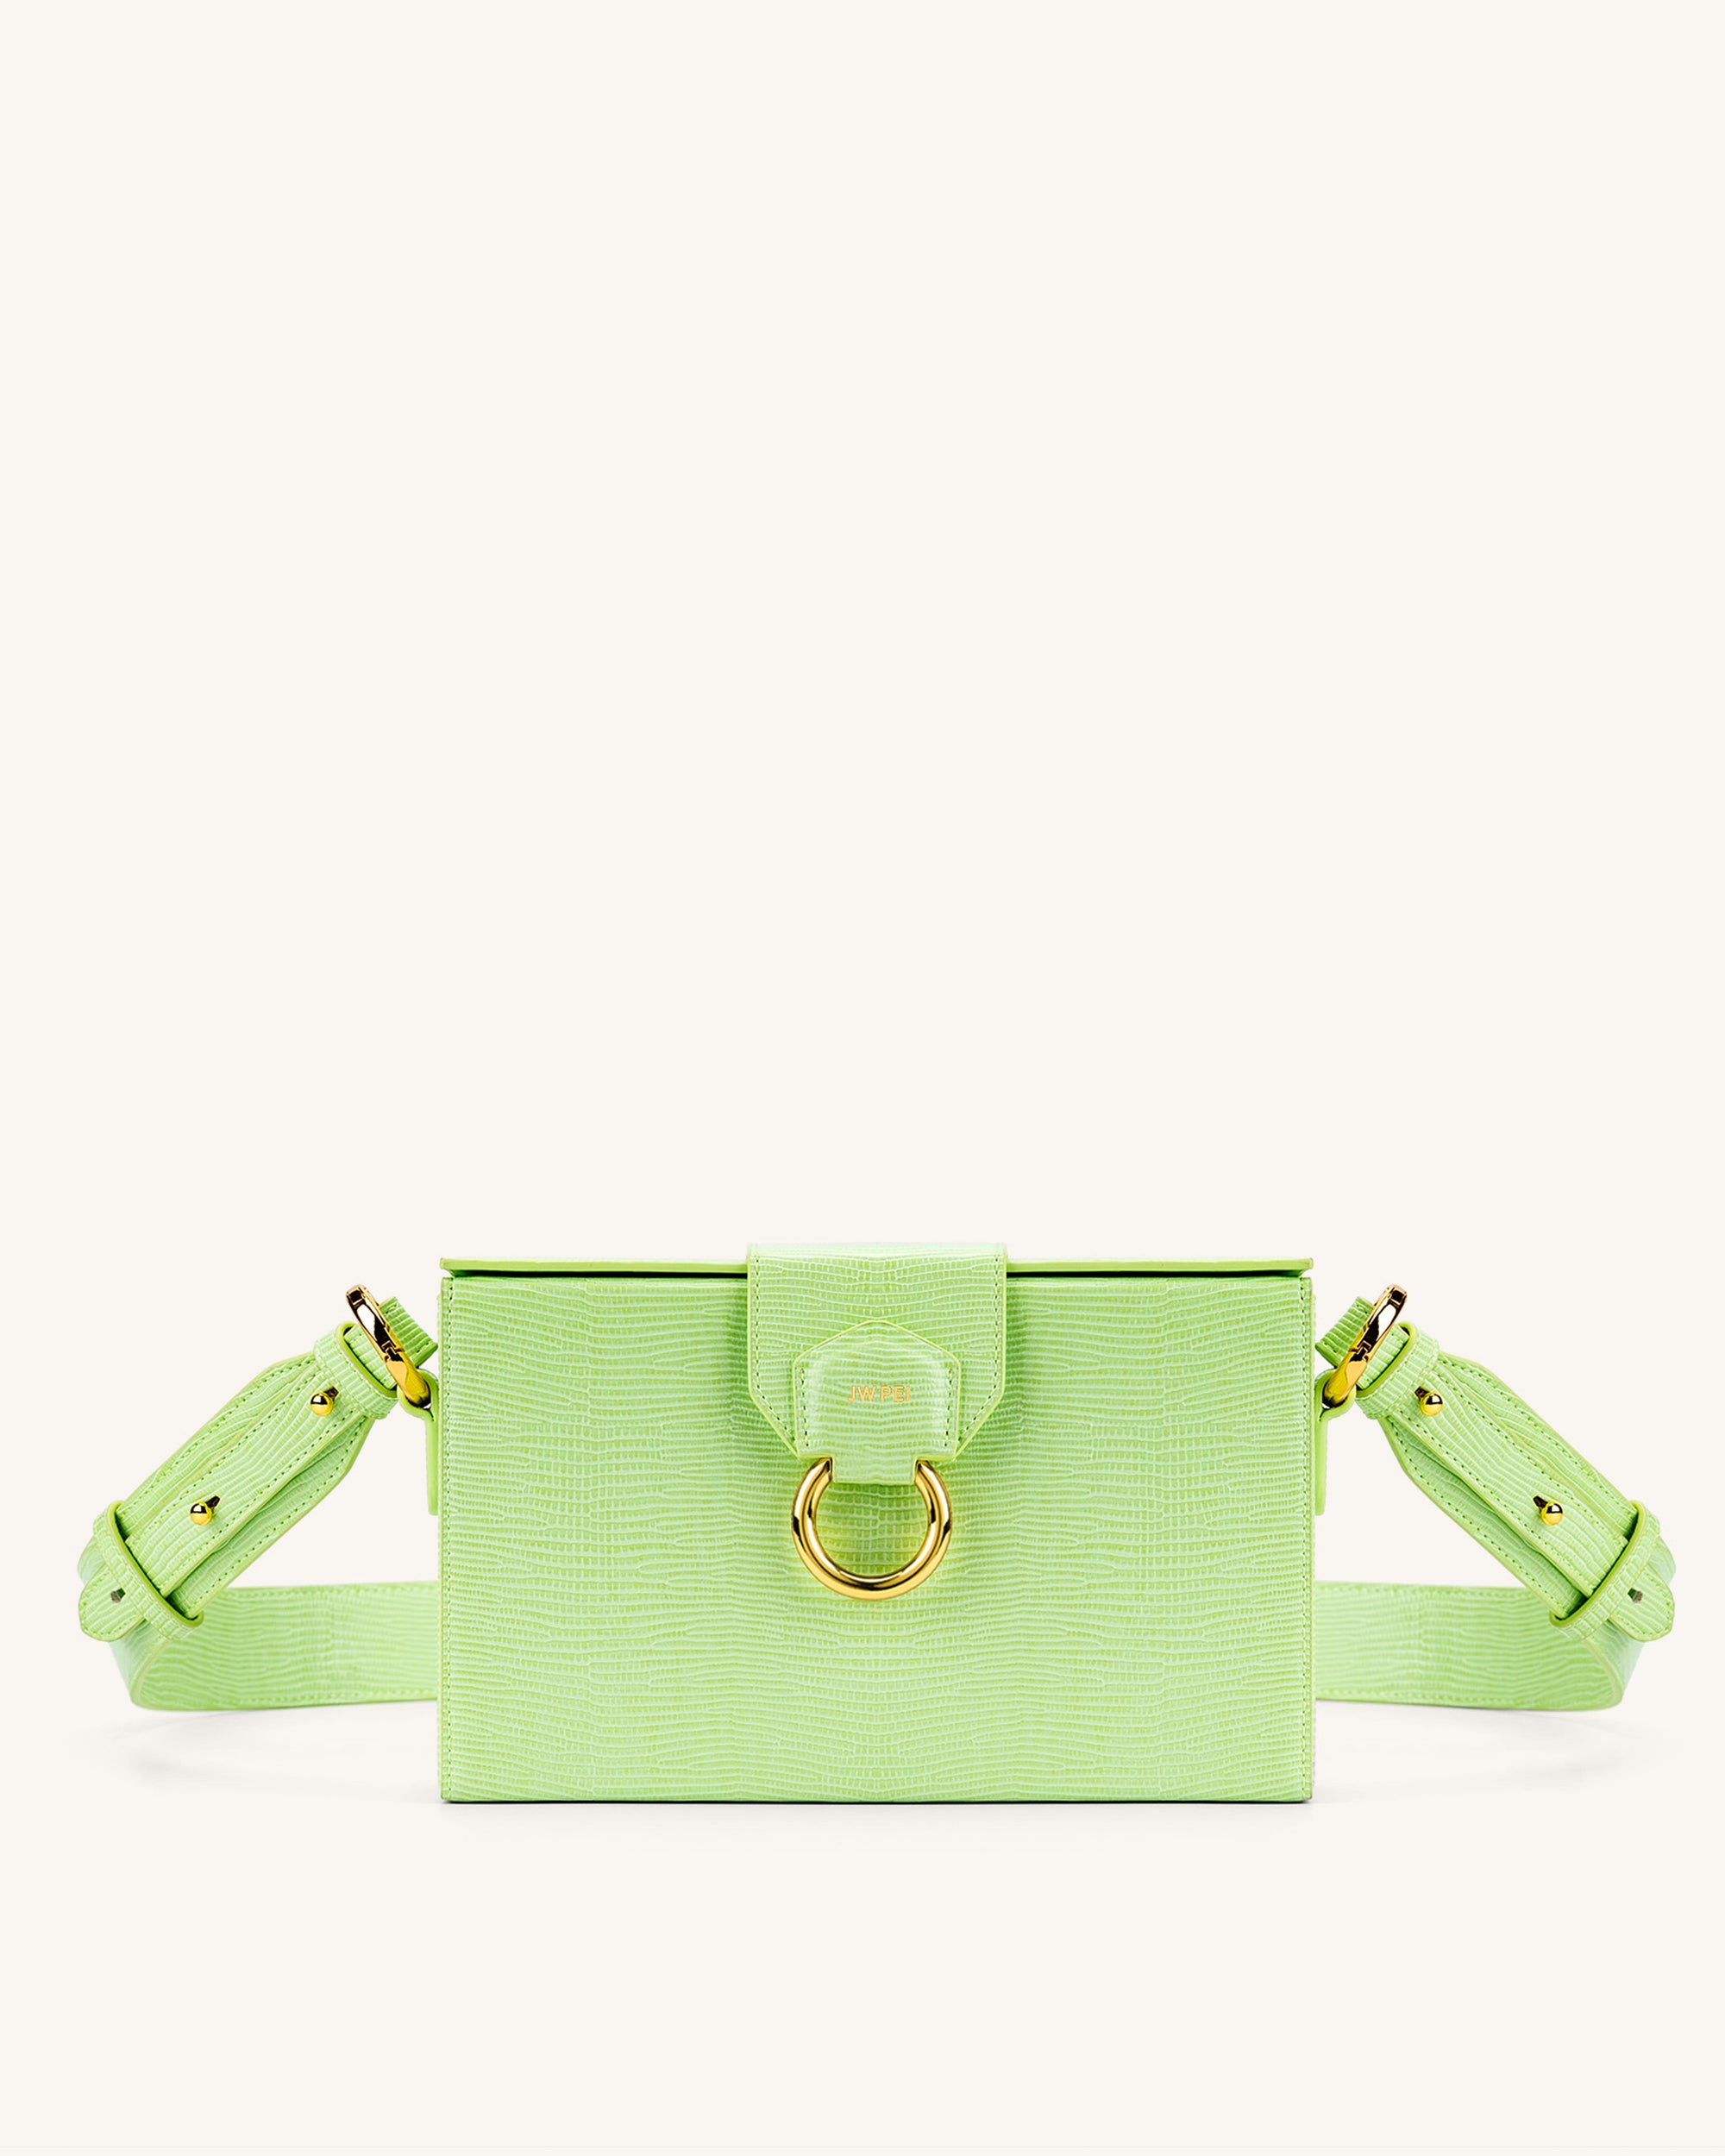 Hot Neon Green Purse - Structured Handbag - Color Block Purse - $41.00 -  Lulus